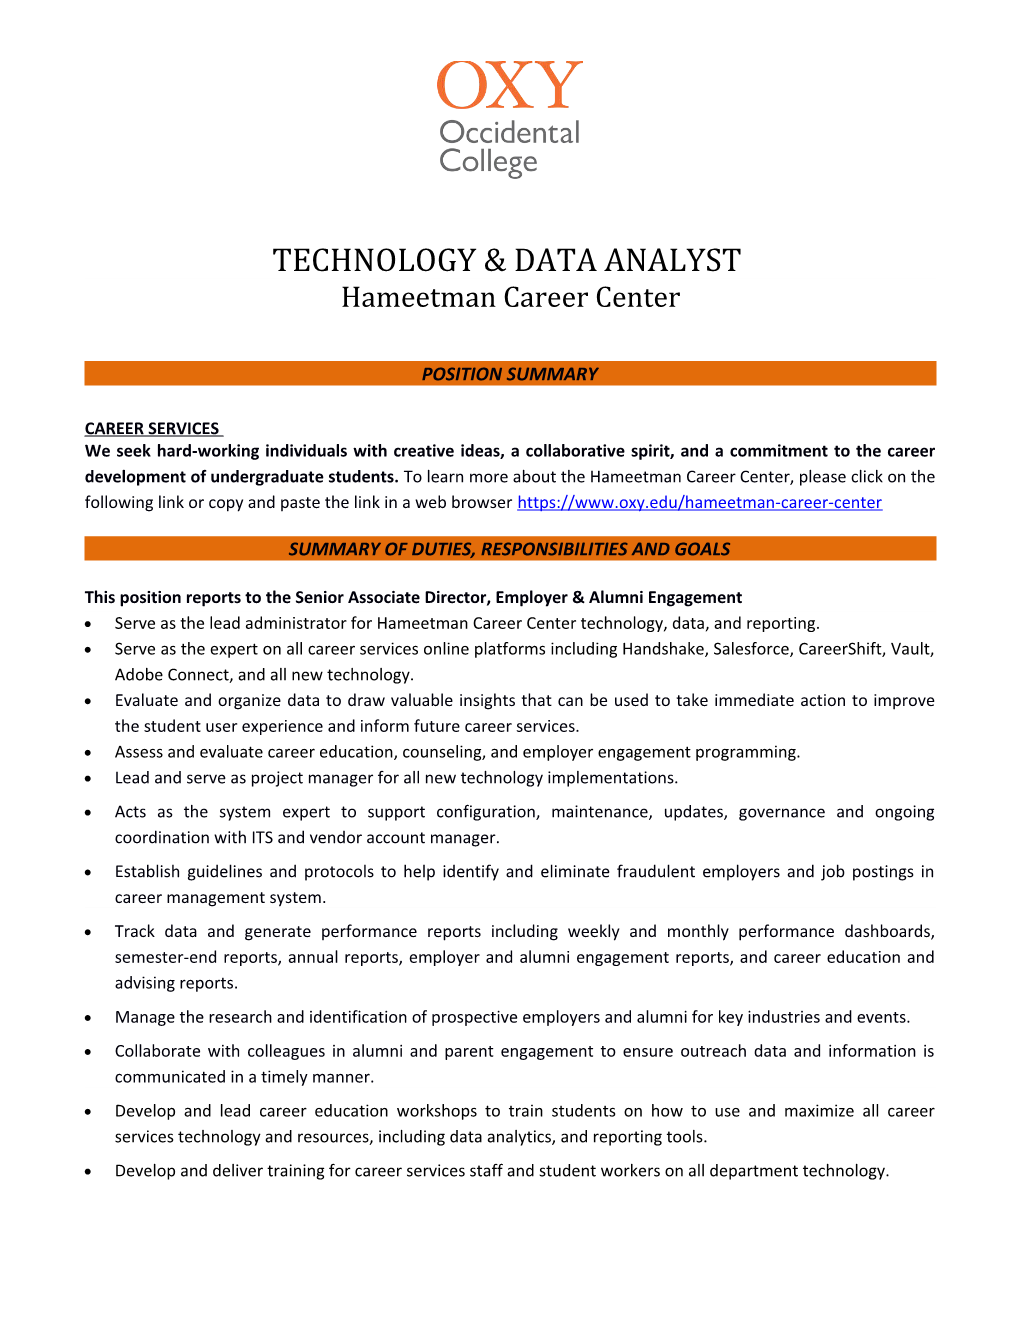 Technology & Data Analyst